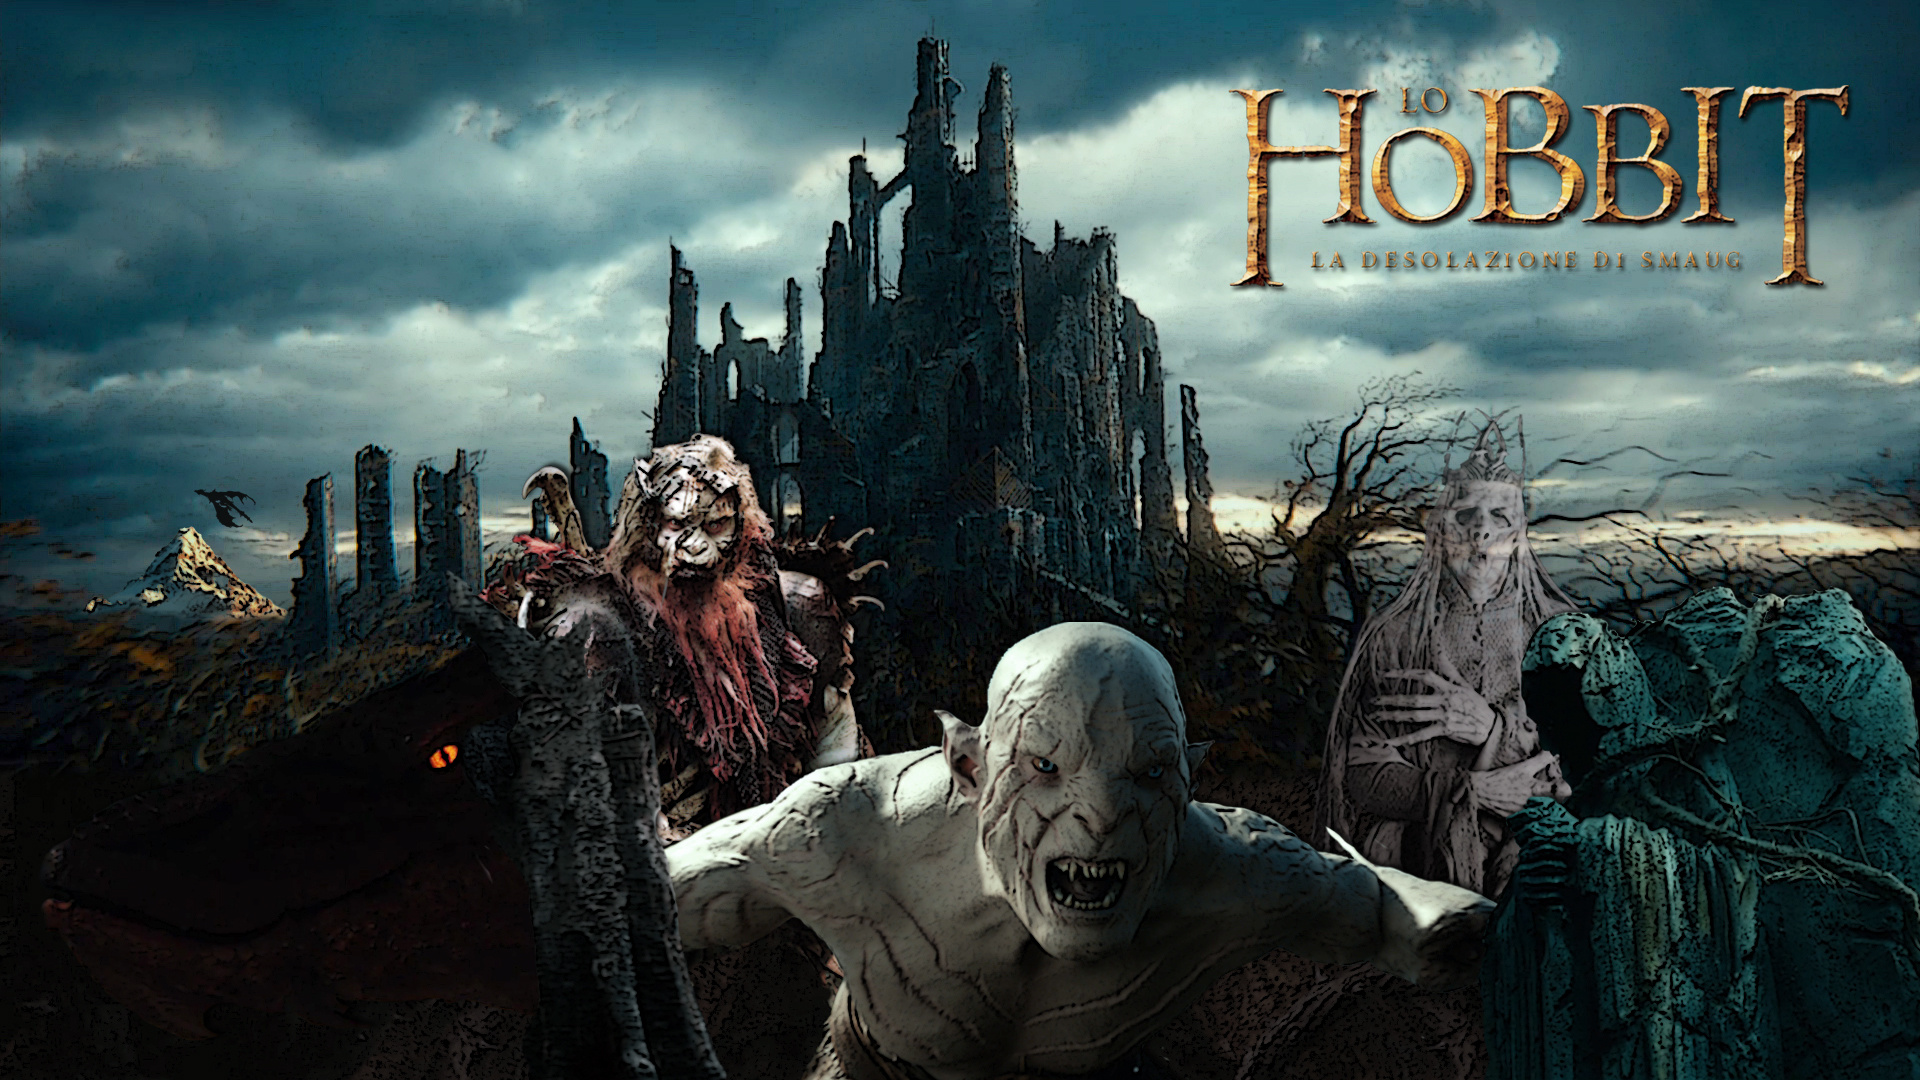 The Hobbit (Movie): Azog, An Orc-lord of the Third Age, Dol Guldur. 1920x1080 Full HD Wallpaper.